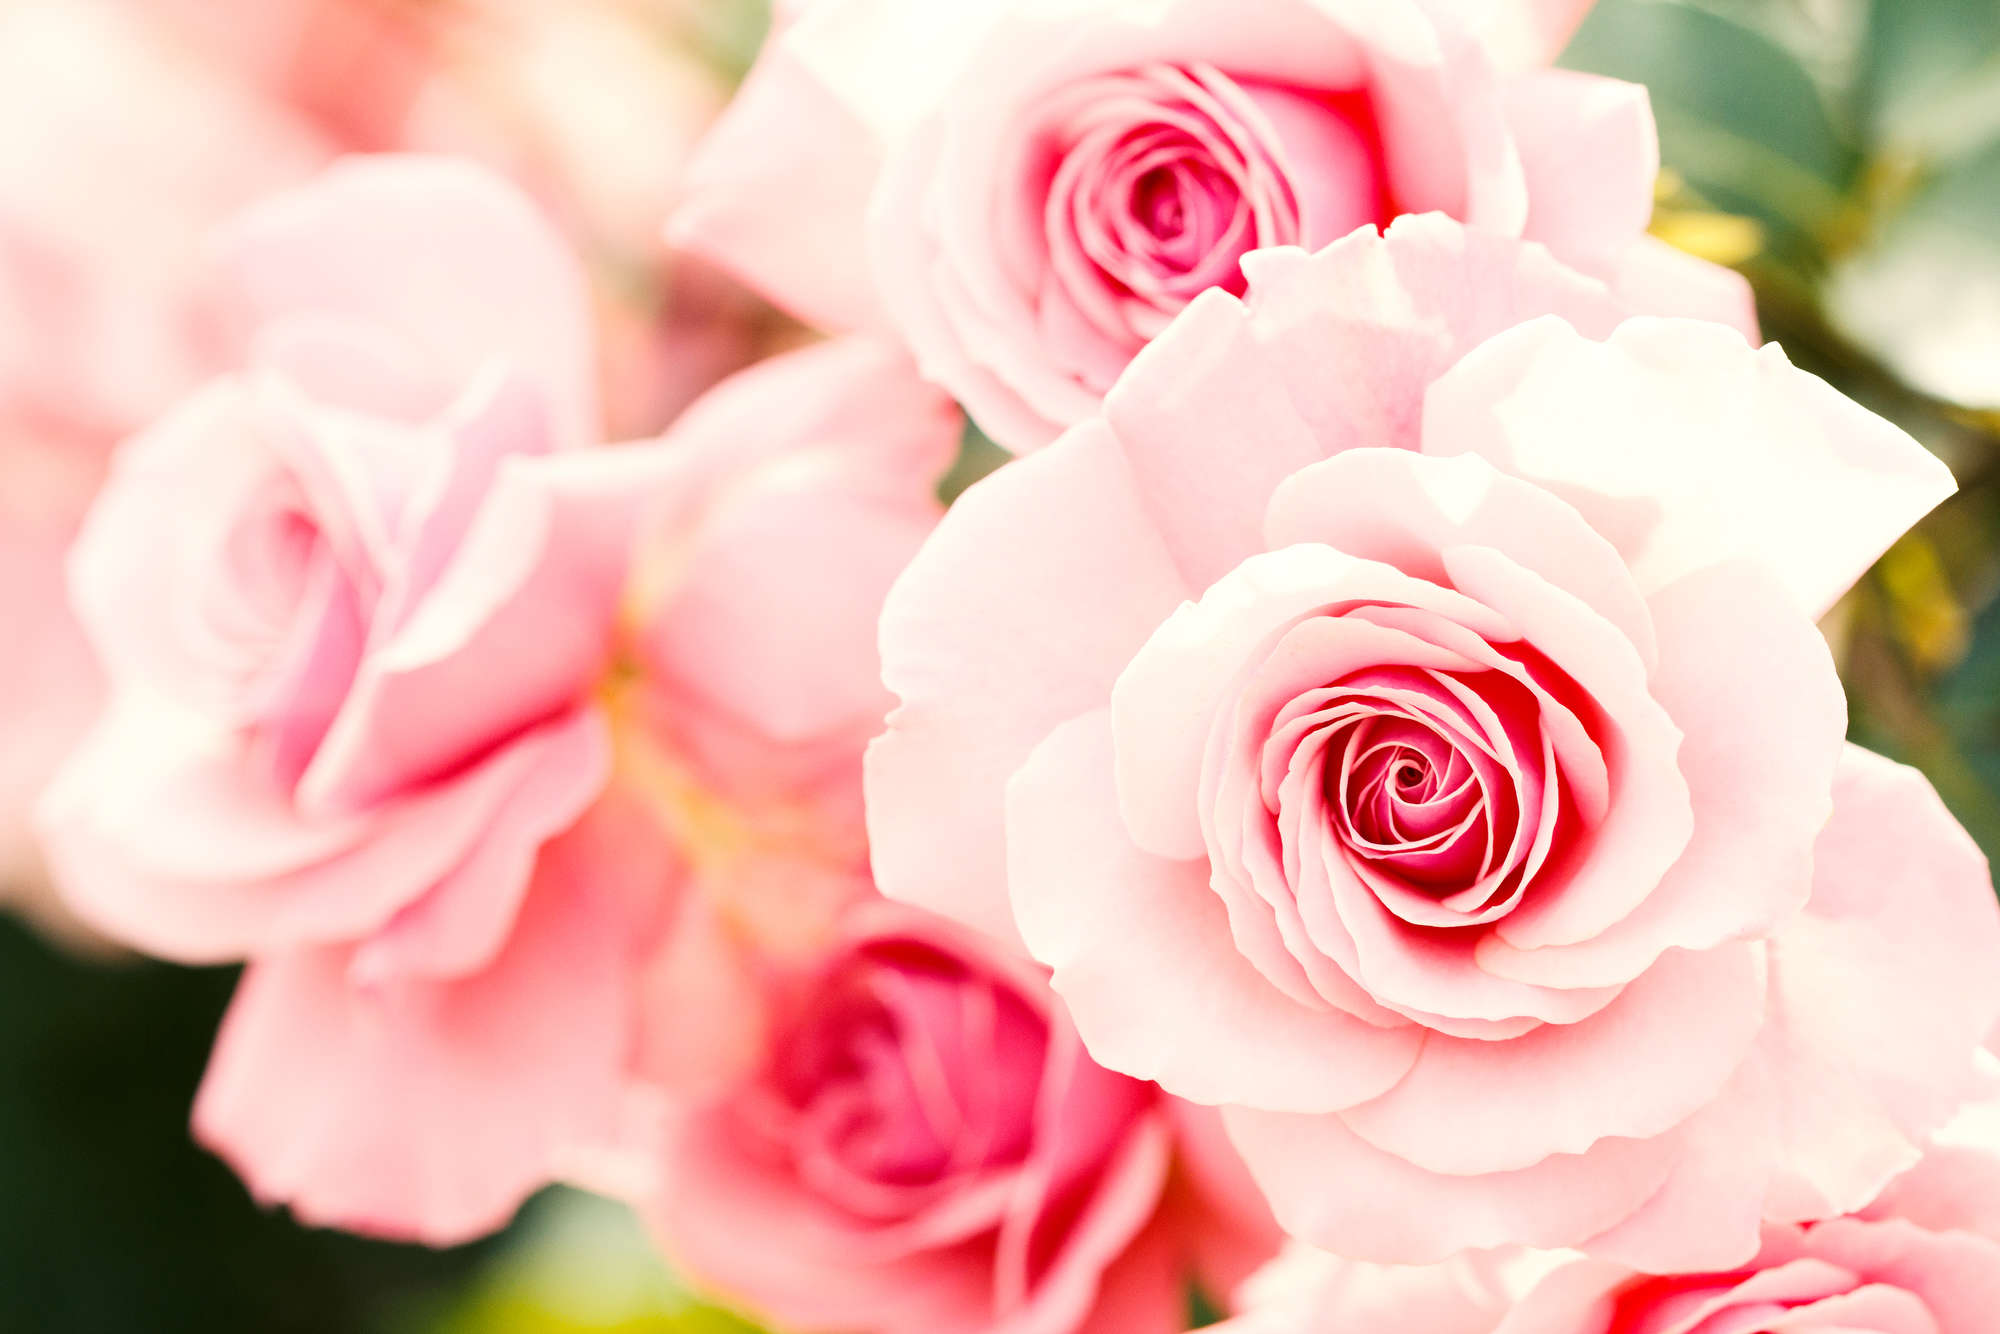             Piante Carta da parati rose rosa su vello liscio madreperla
        